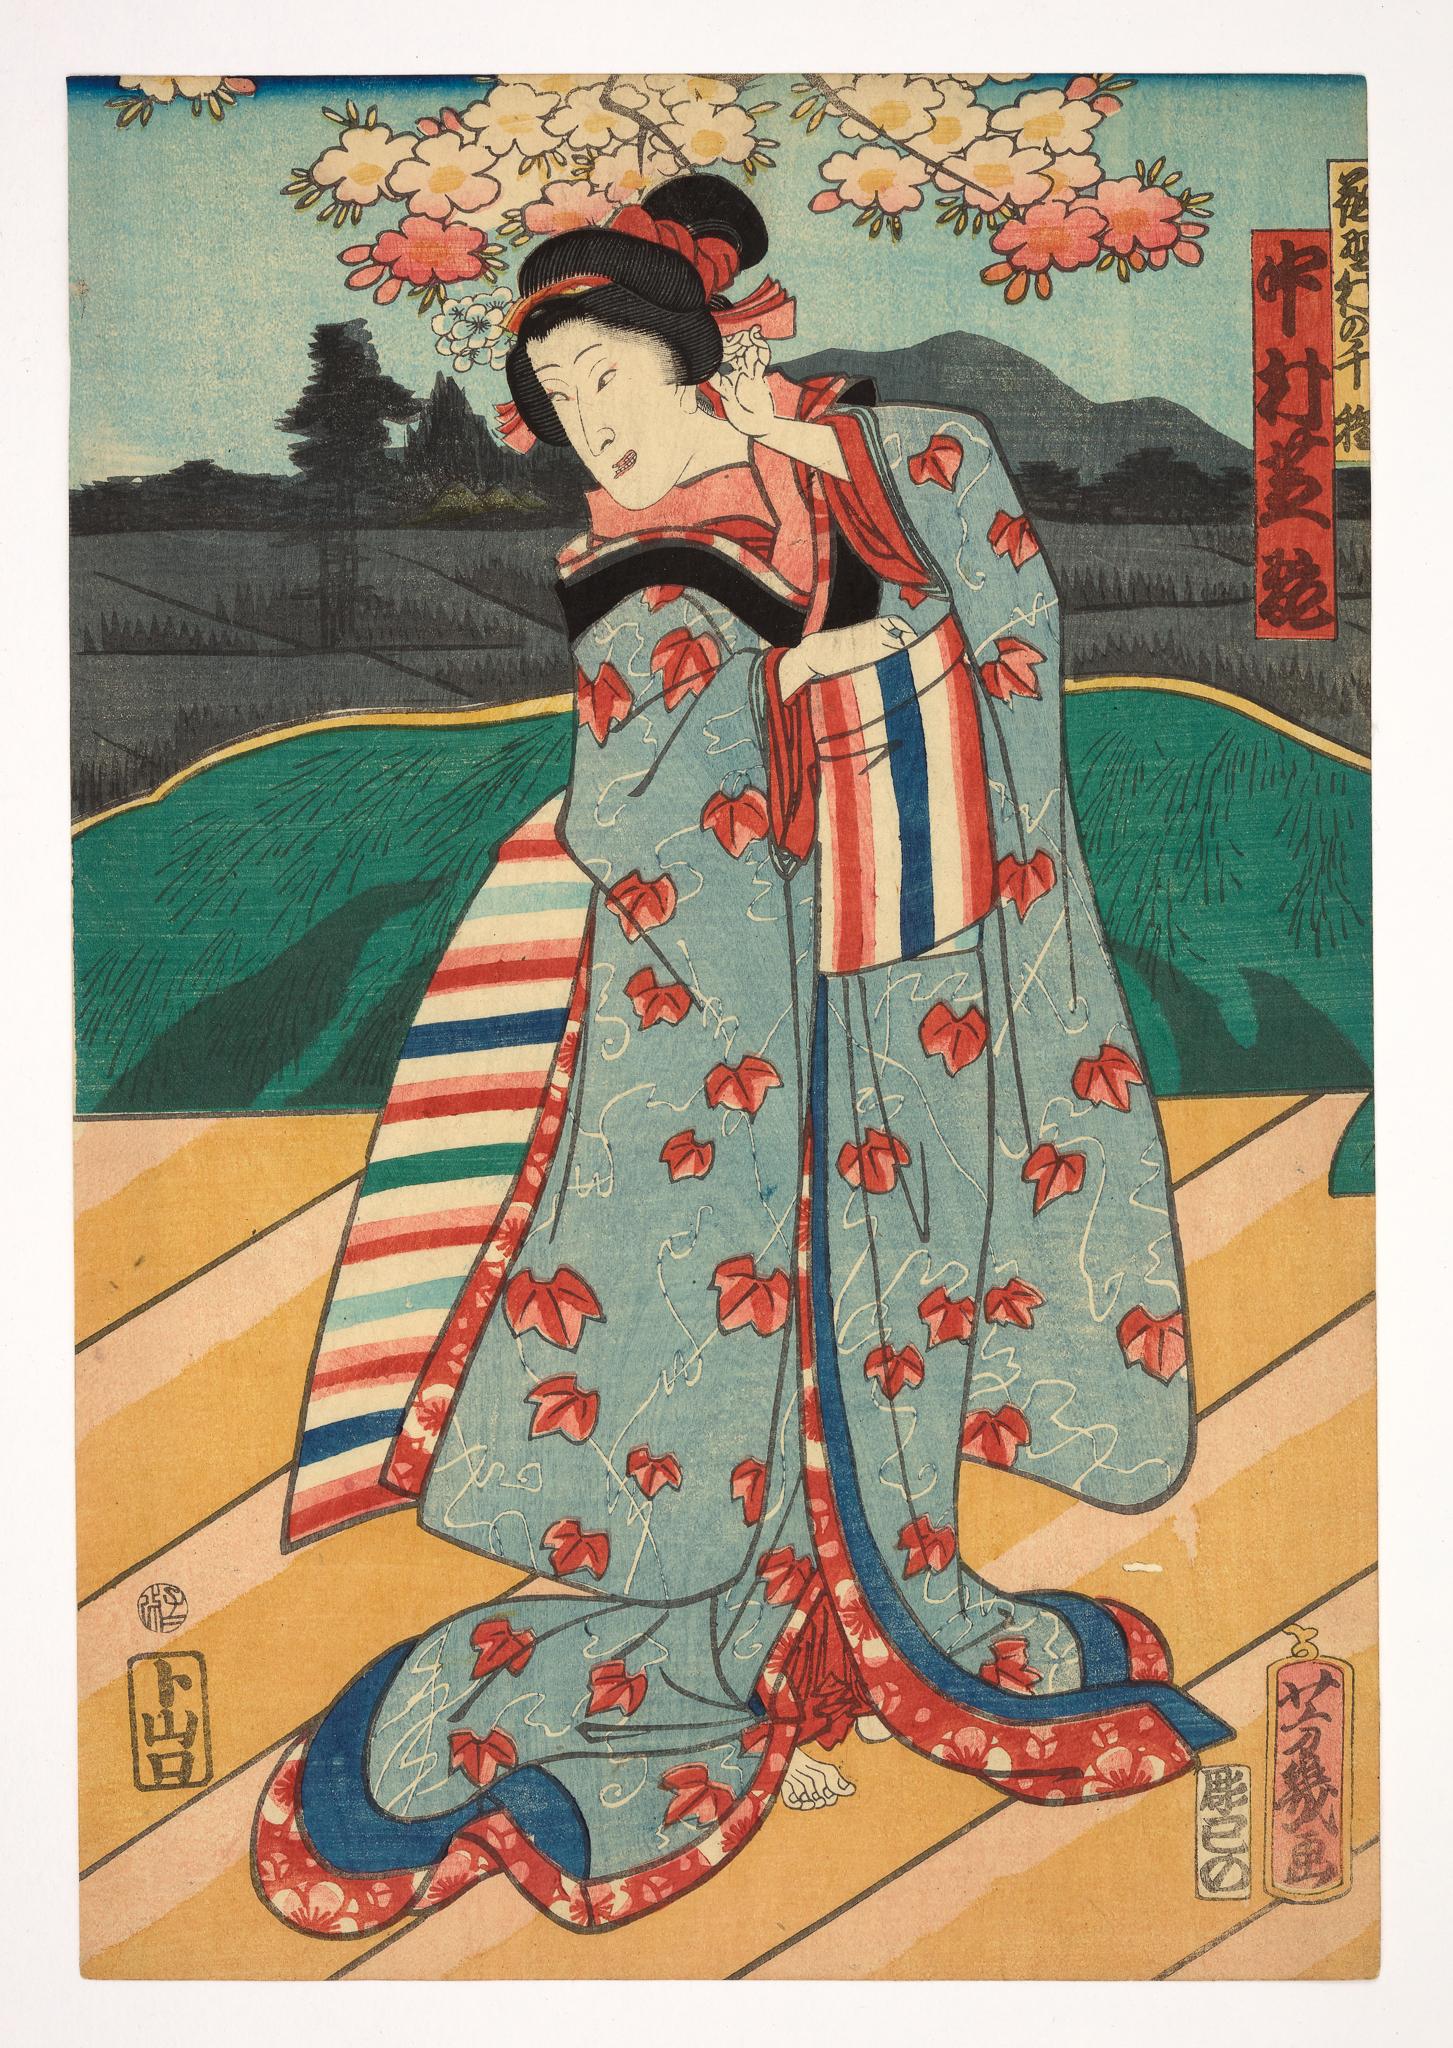 Utagawa Yoshiiku Figurative Print - Original Japanese woodblock print - 19th century